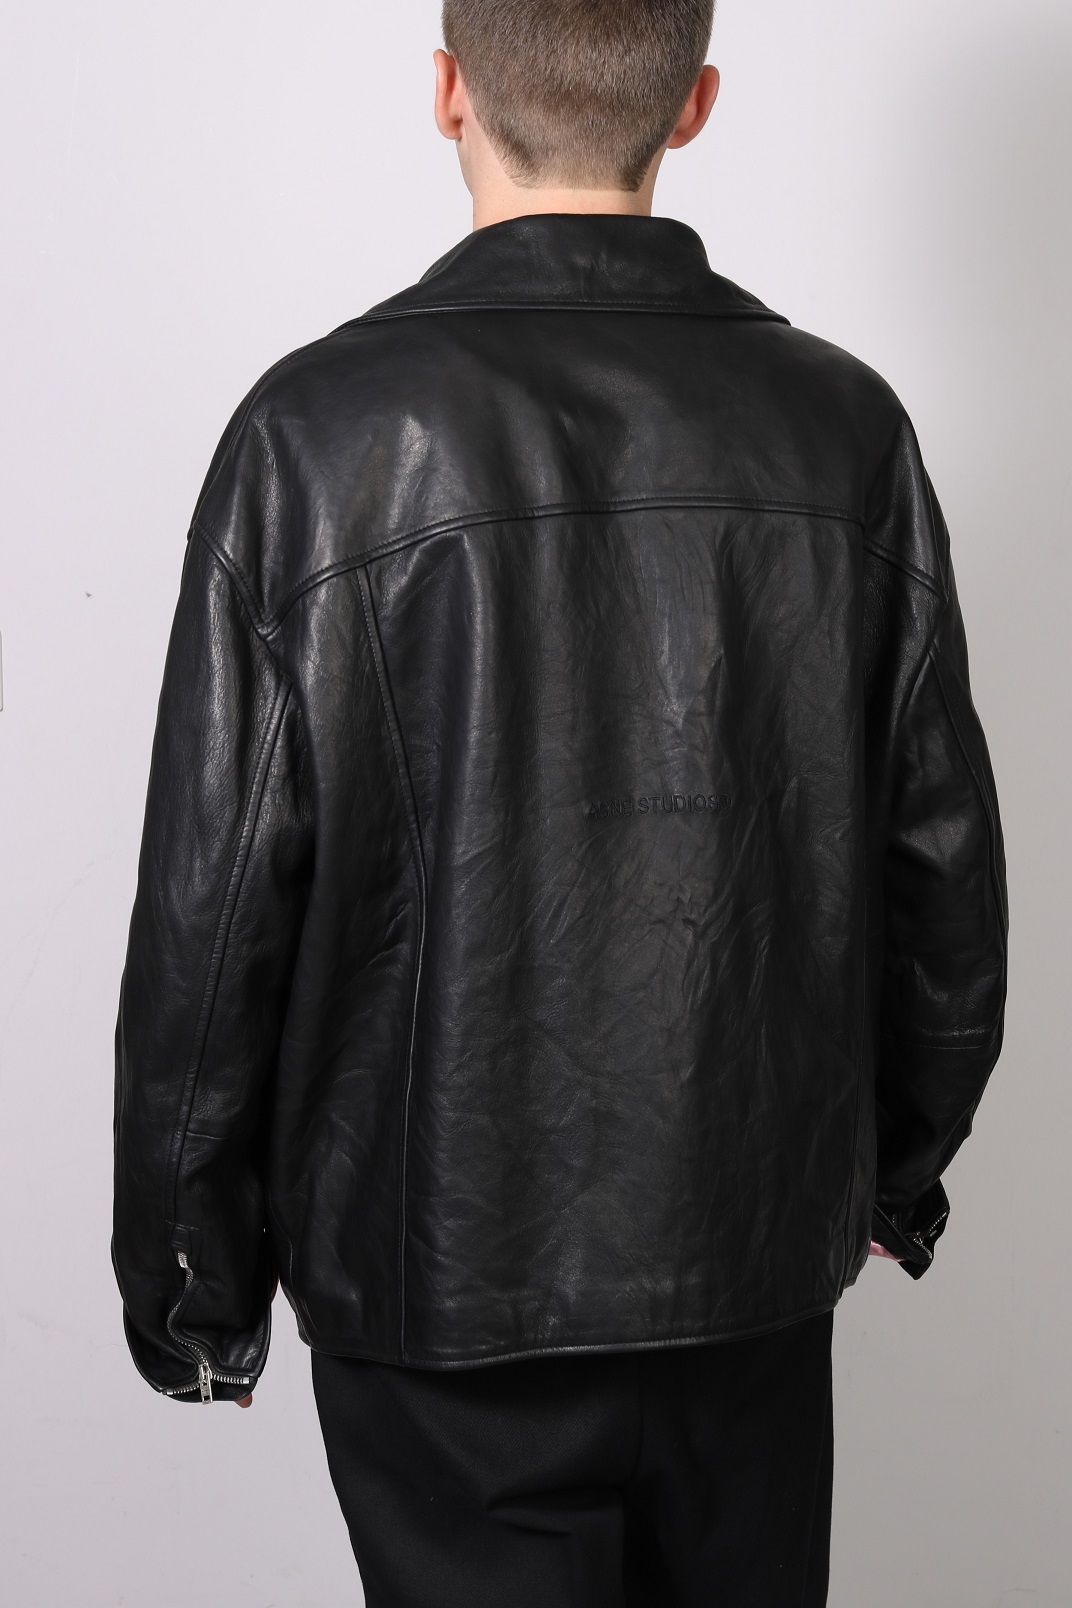 ACNE STUDIOS Vintage Leather Jacket in Black 48